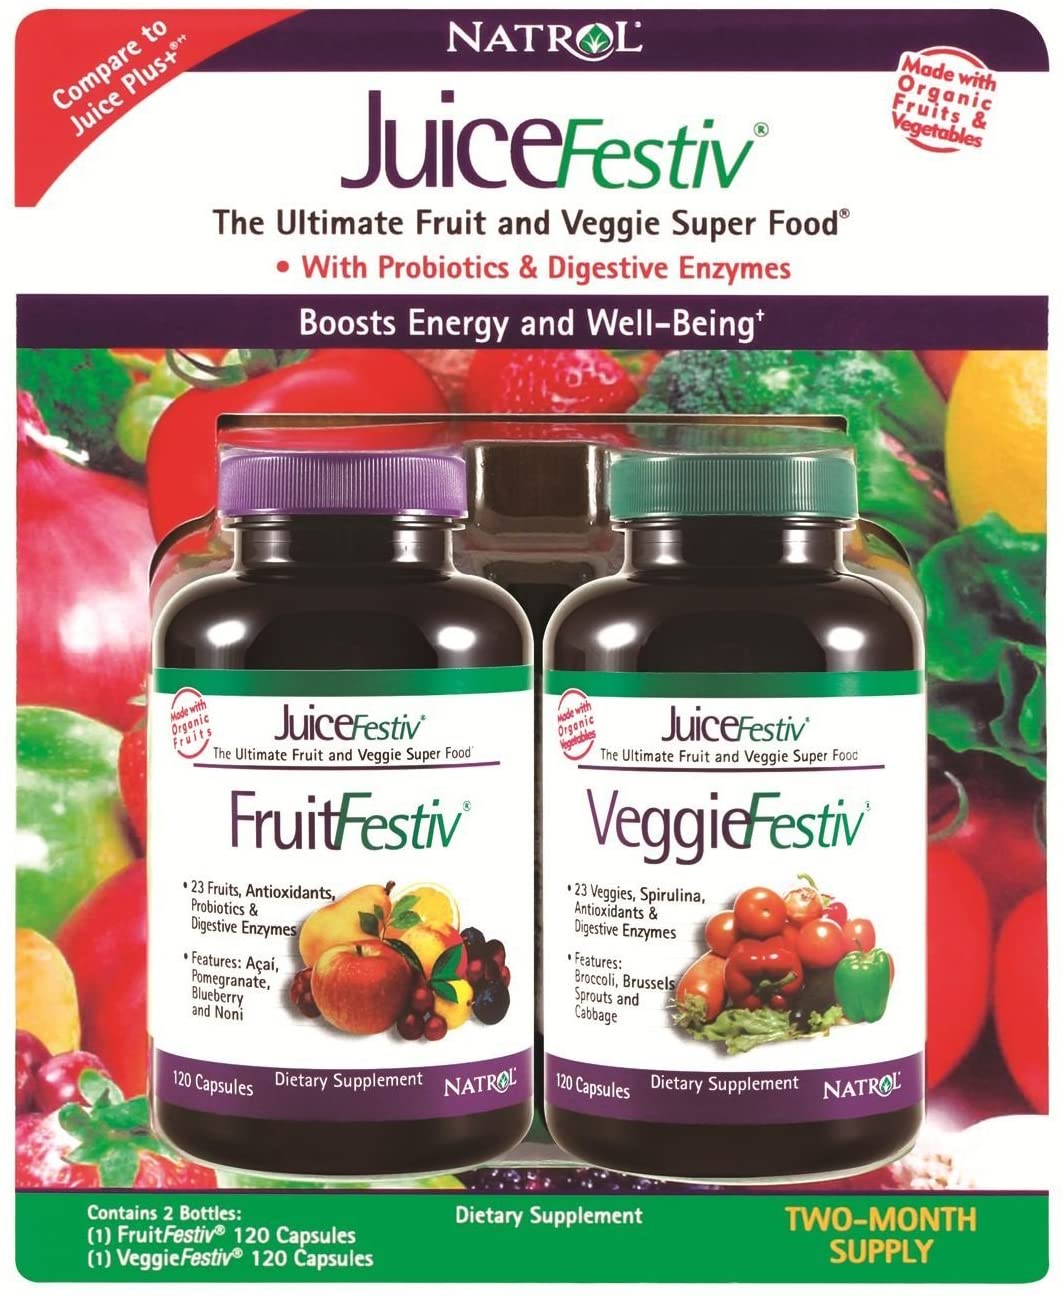 Natrol JuiceFestiv Daily Fruit & Veggie - Top 10 Fruit and Vegetable supplements